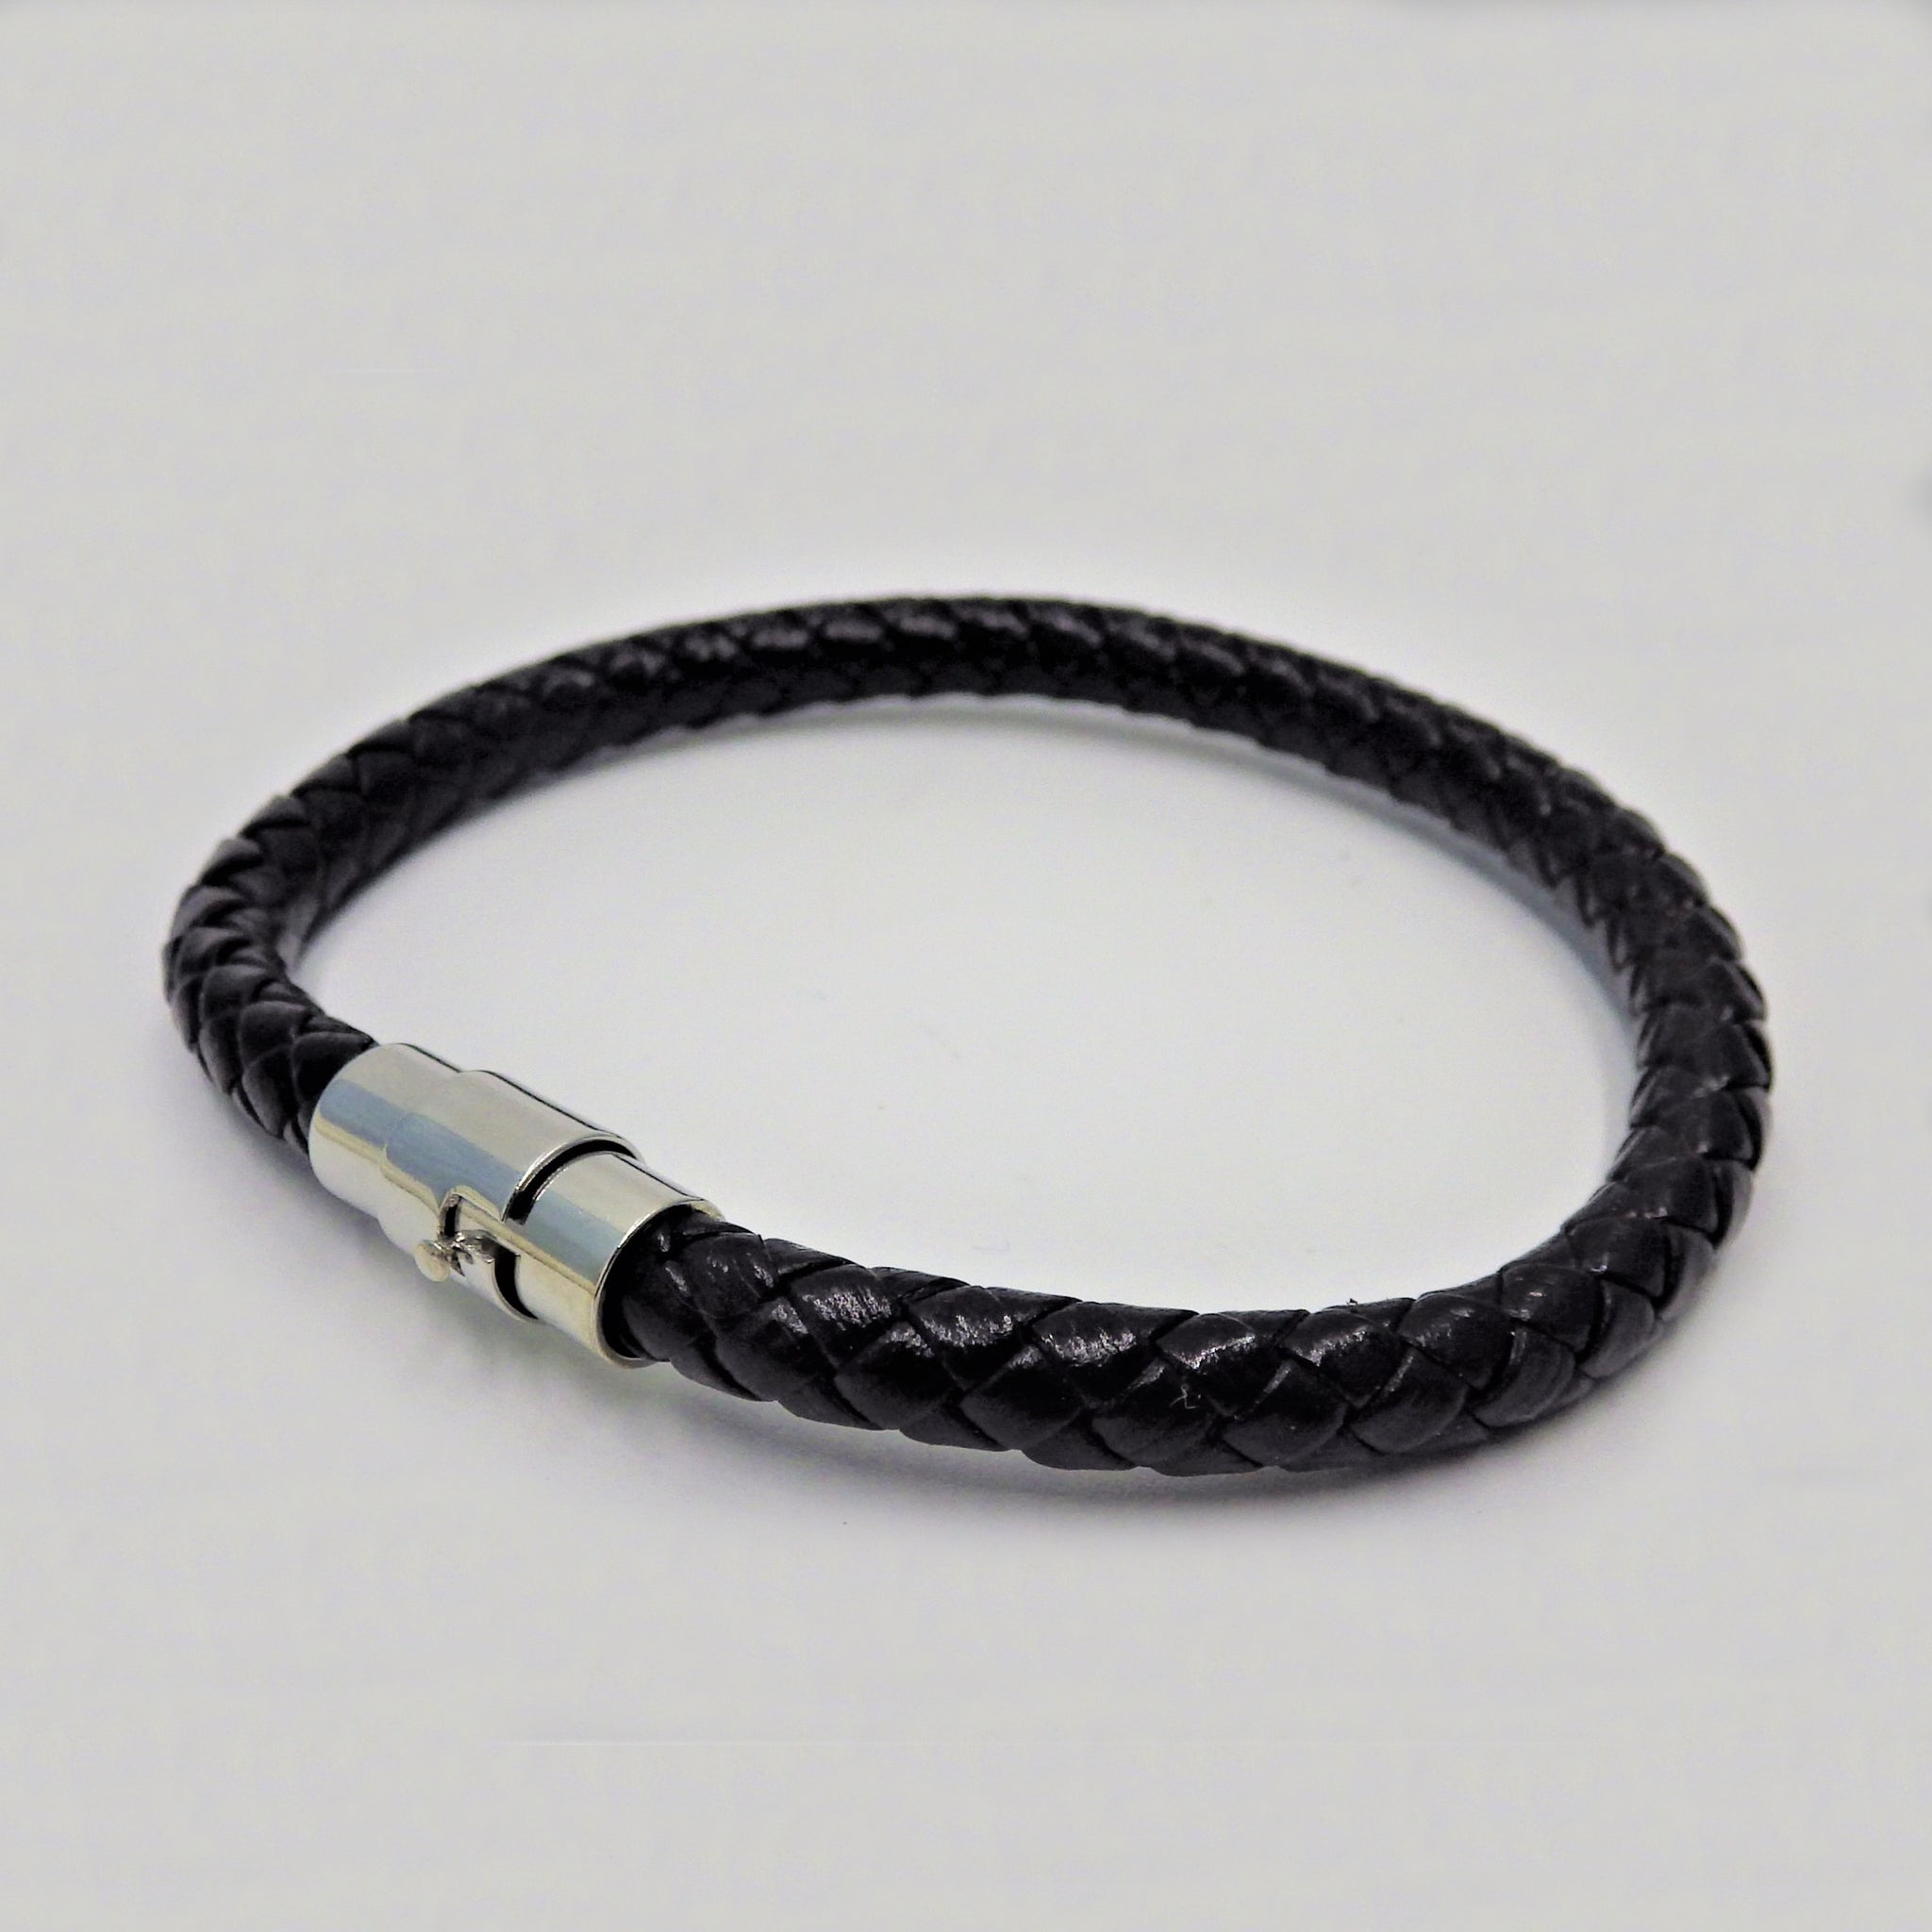 Friendship - Thin Leather Bracelets Black Round clasp